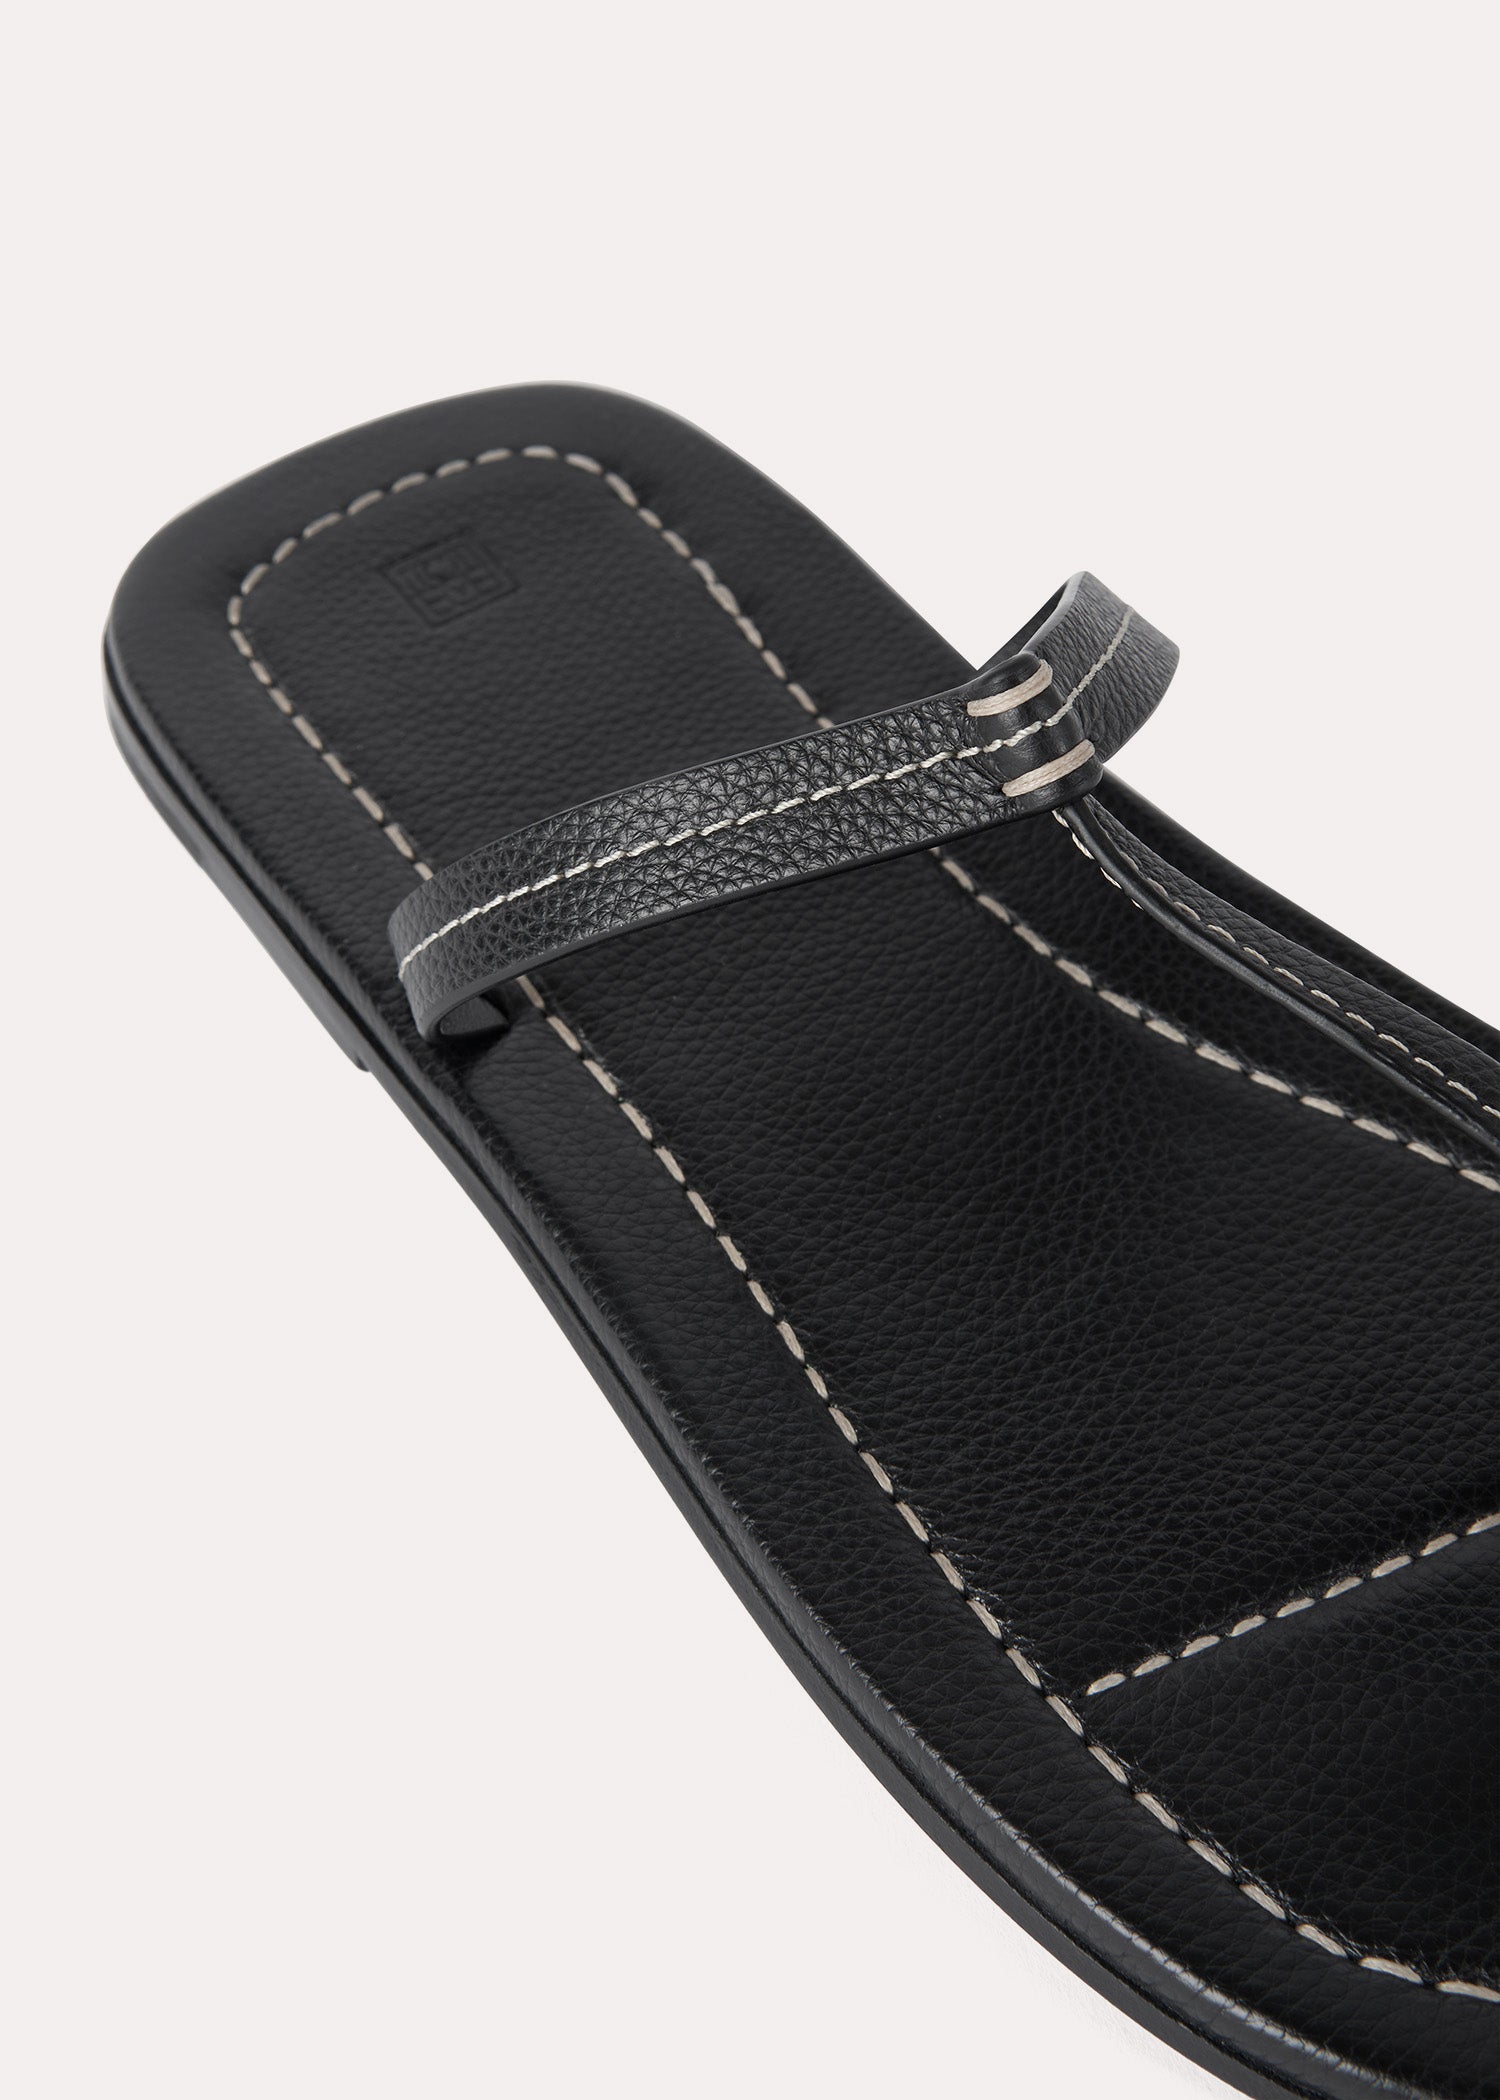 The T-Strap Sandal black grain